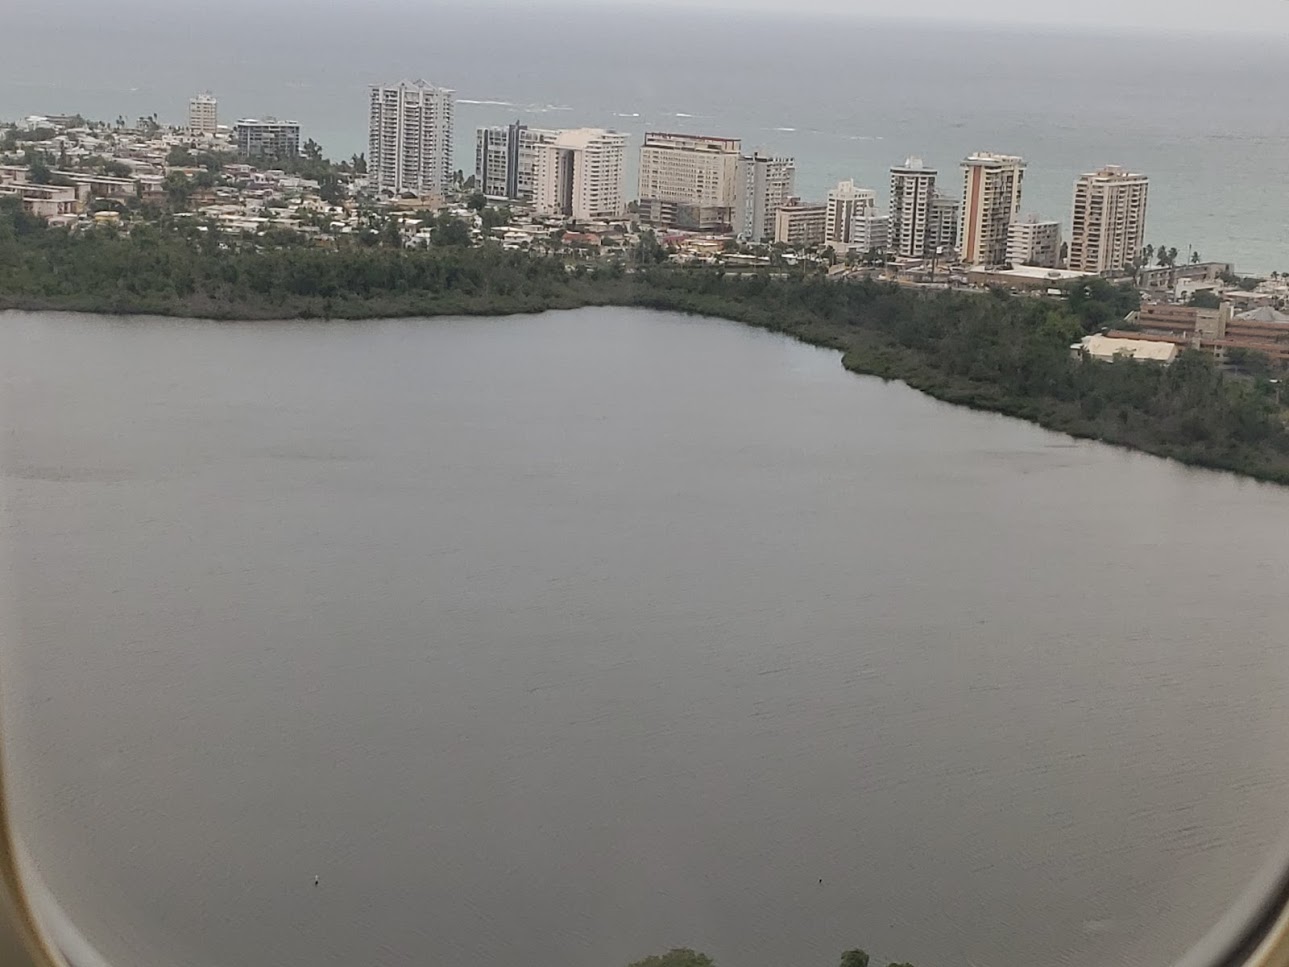 Puerto Rico - August 2018 - Arriving 14